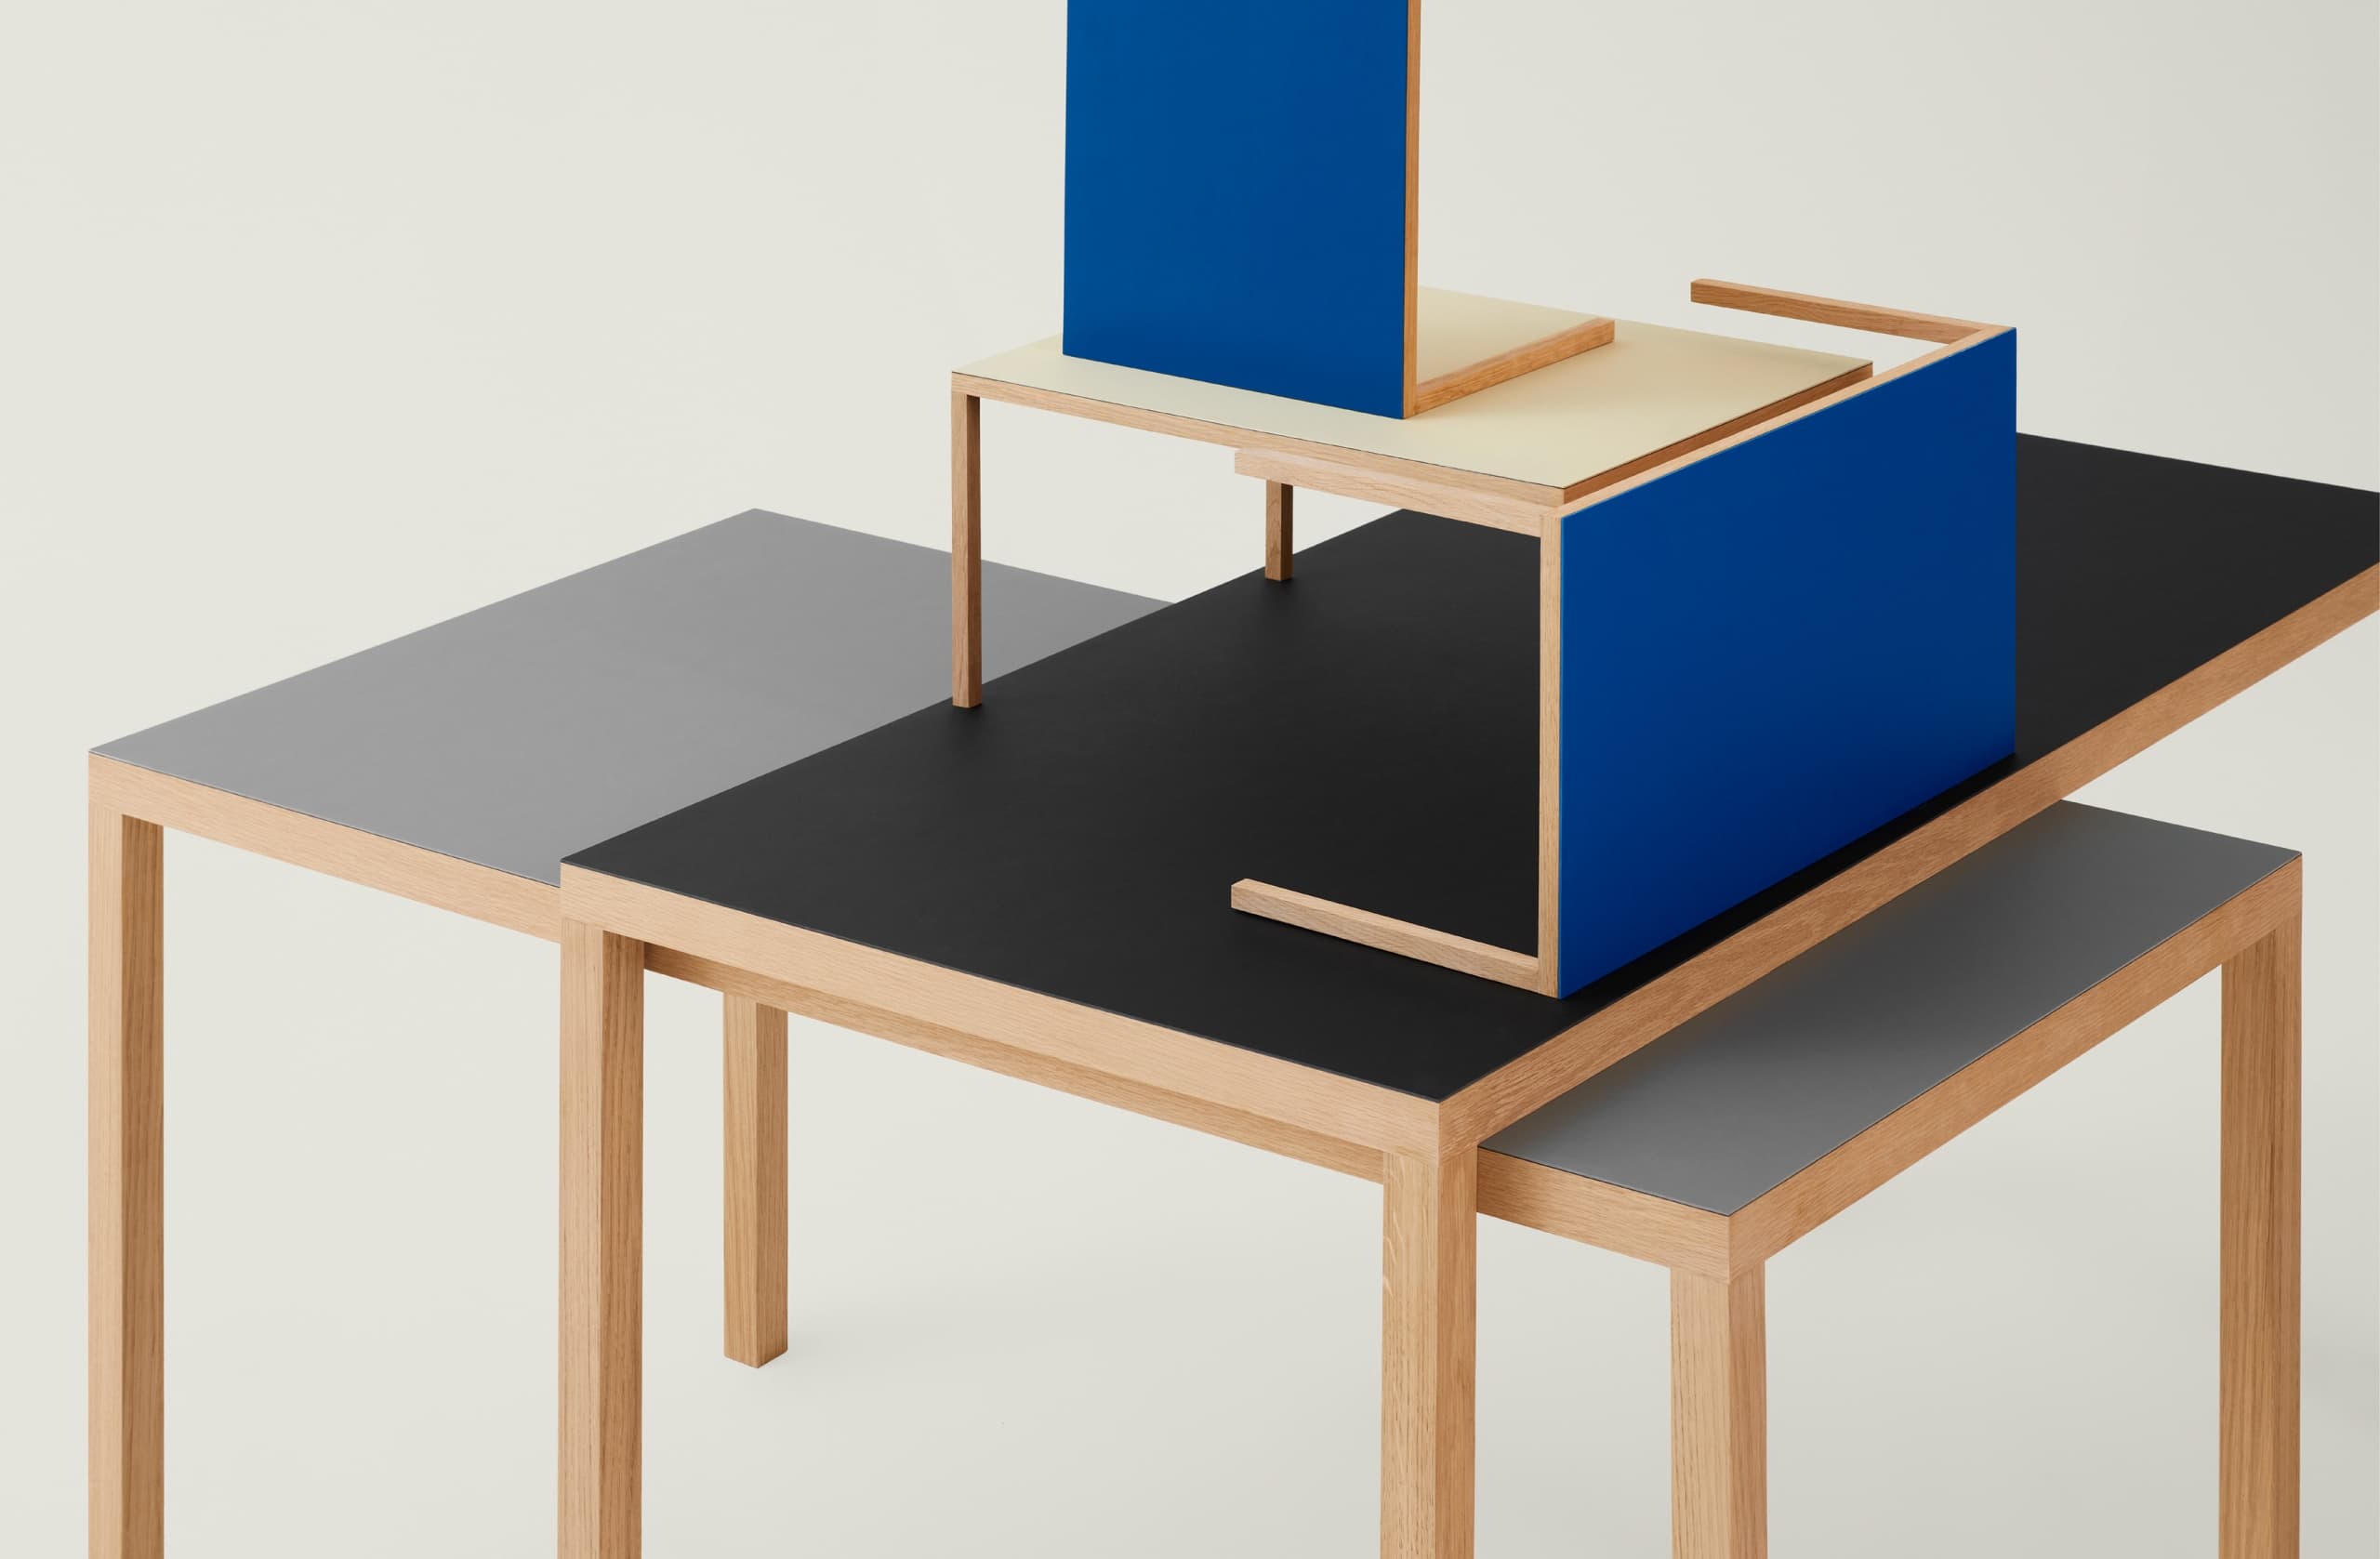 Studio Sander Plug – MacGuffin Magazine - Desk on Desk